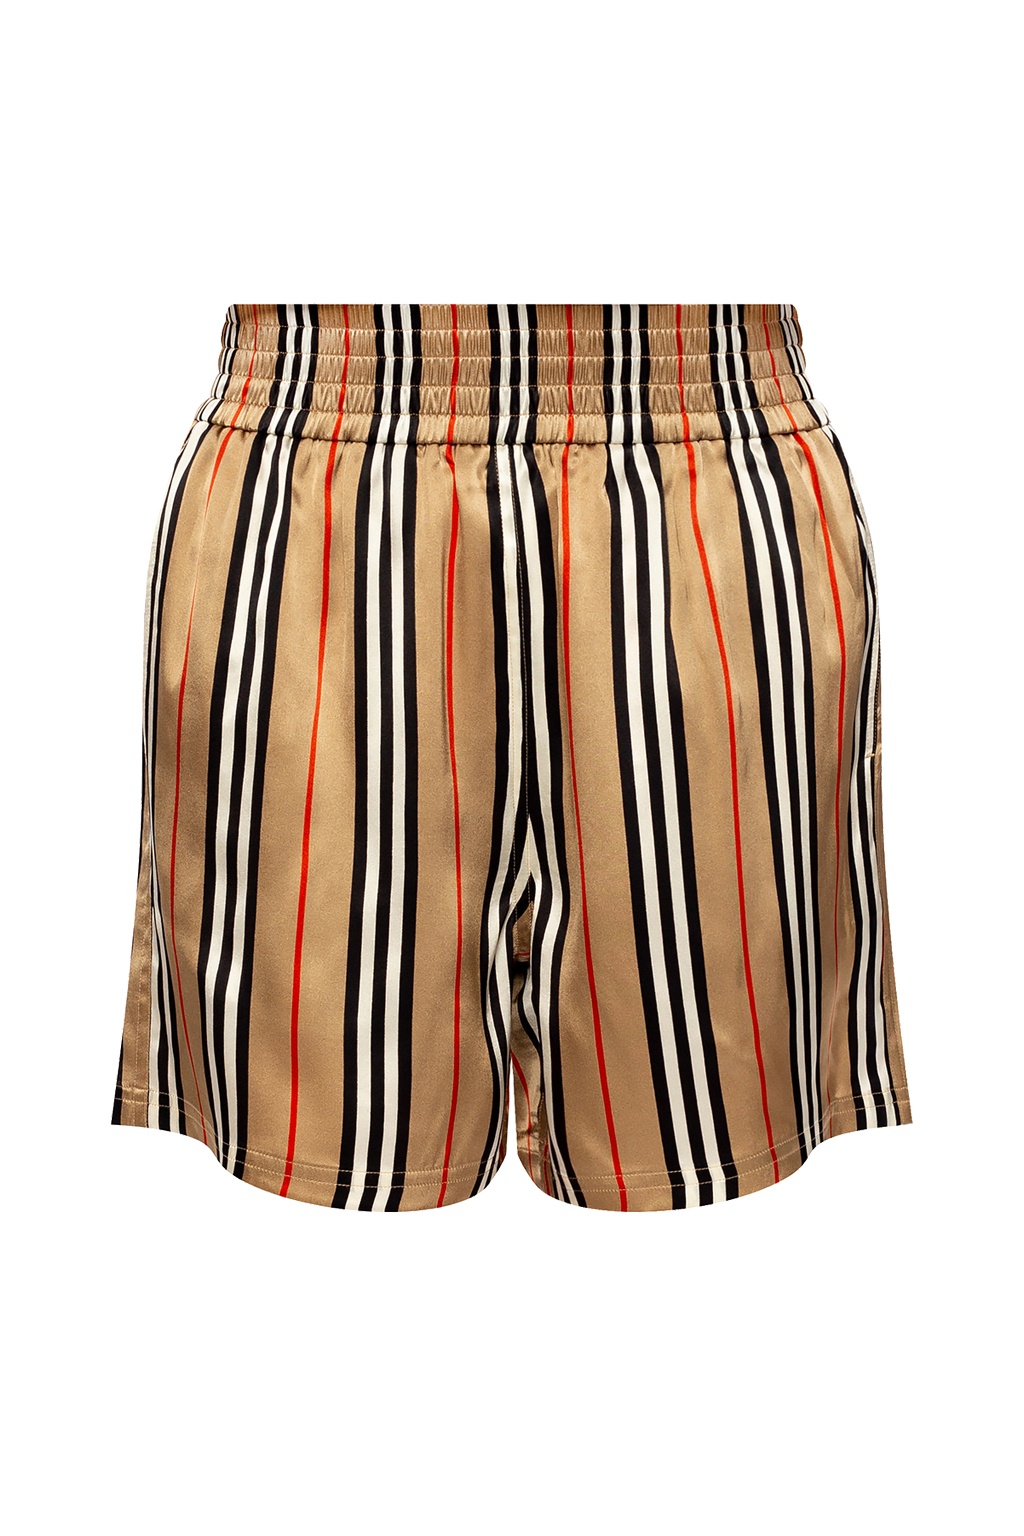 Check Silk Shorts in Archive beige - Women